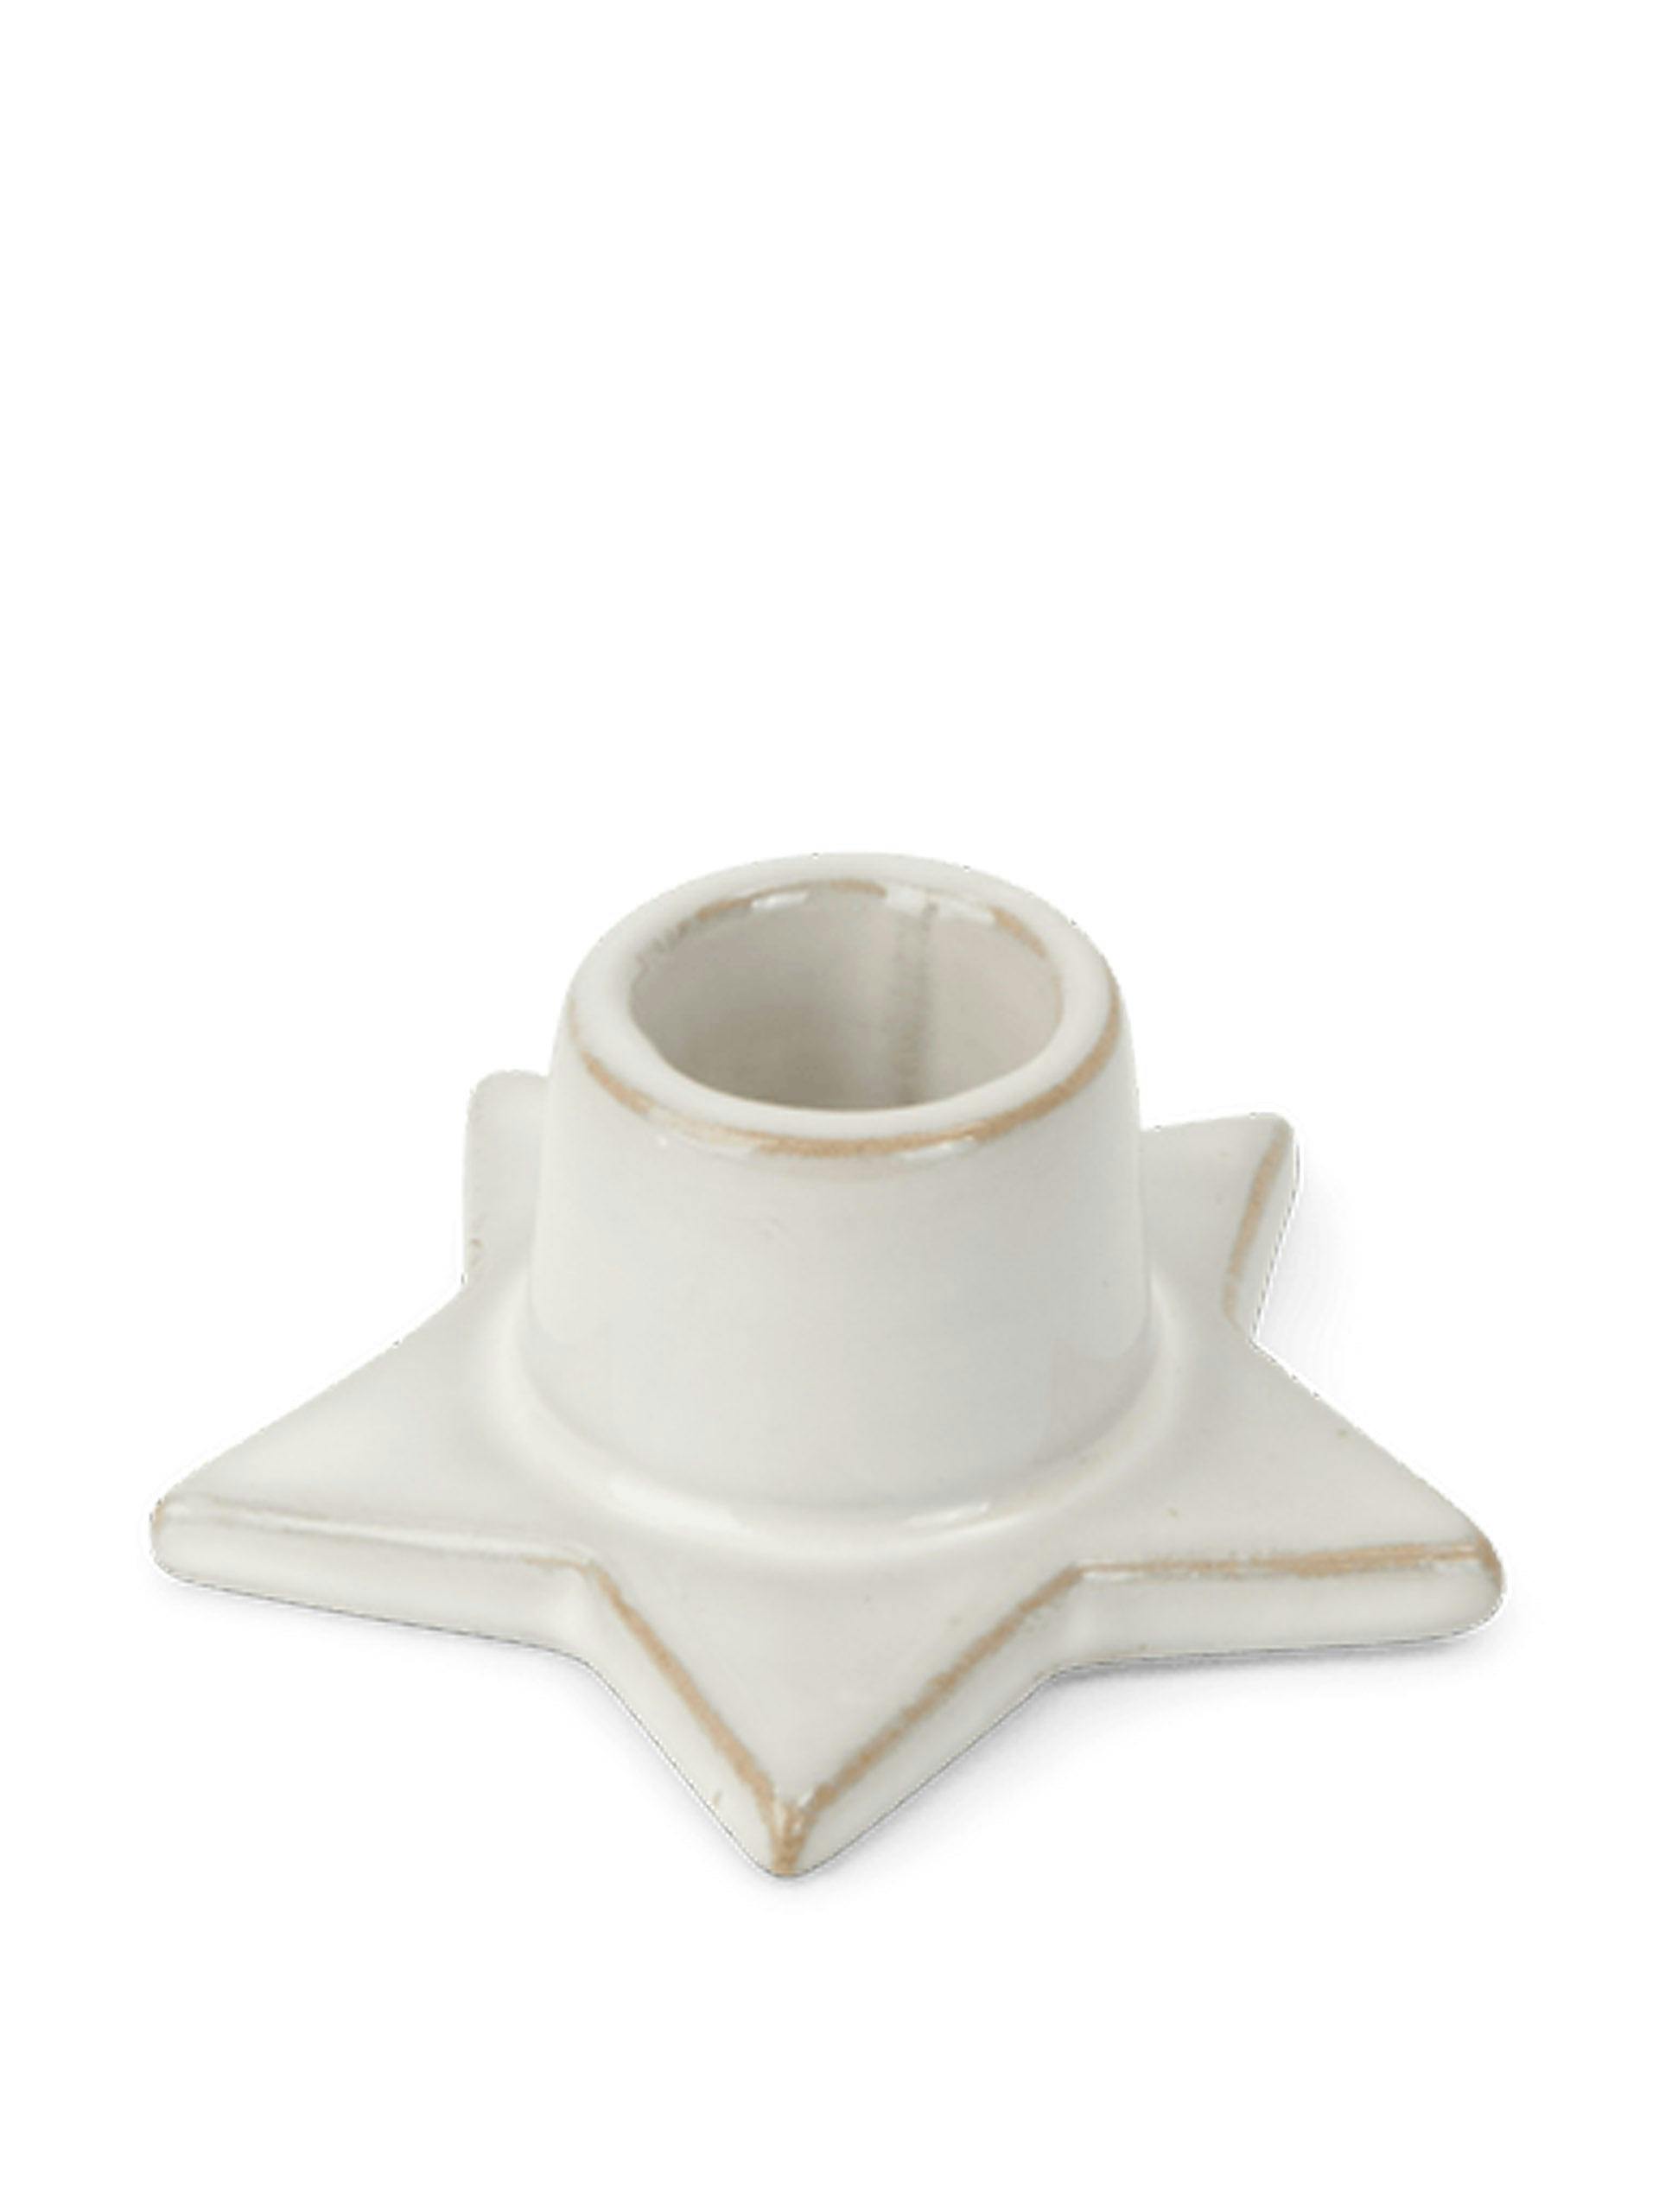 Ceramic dinner candle holder